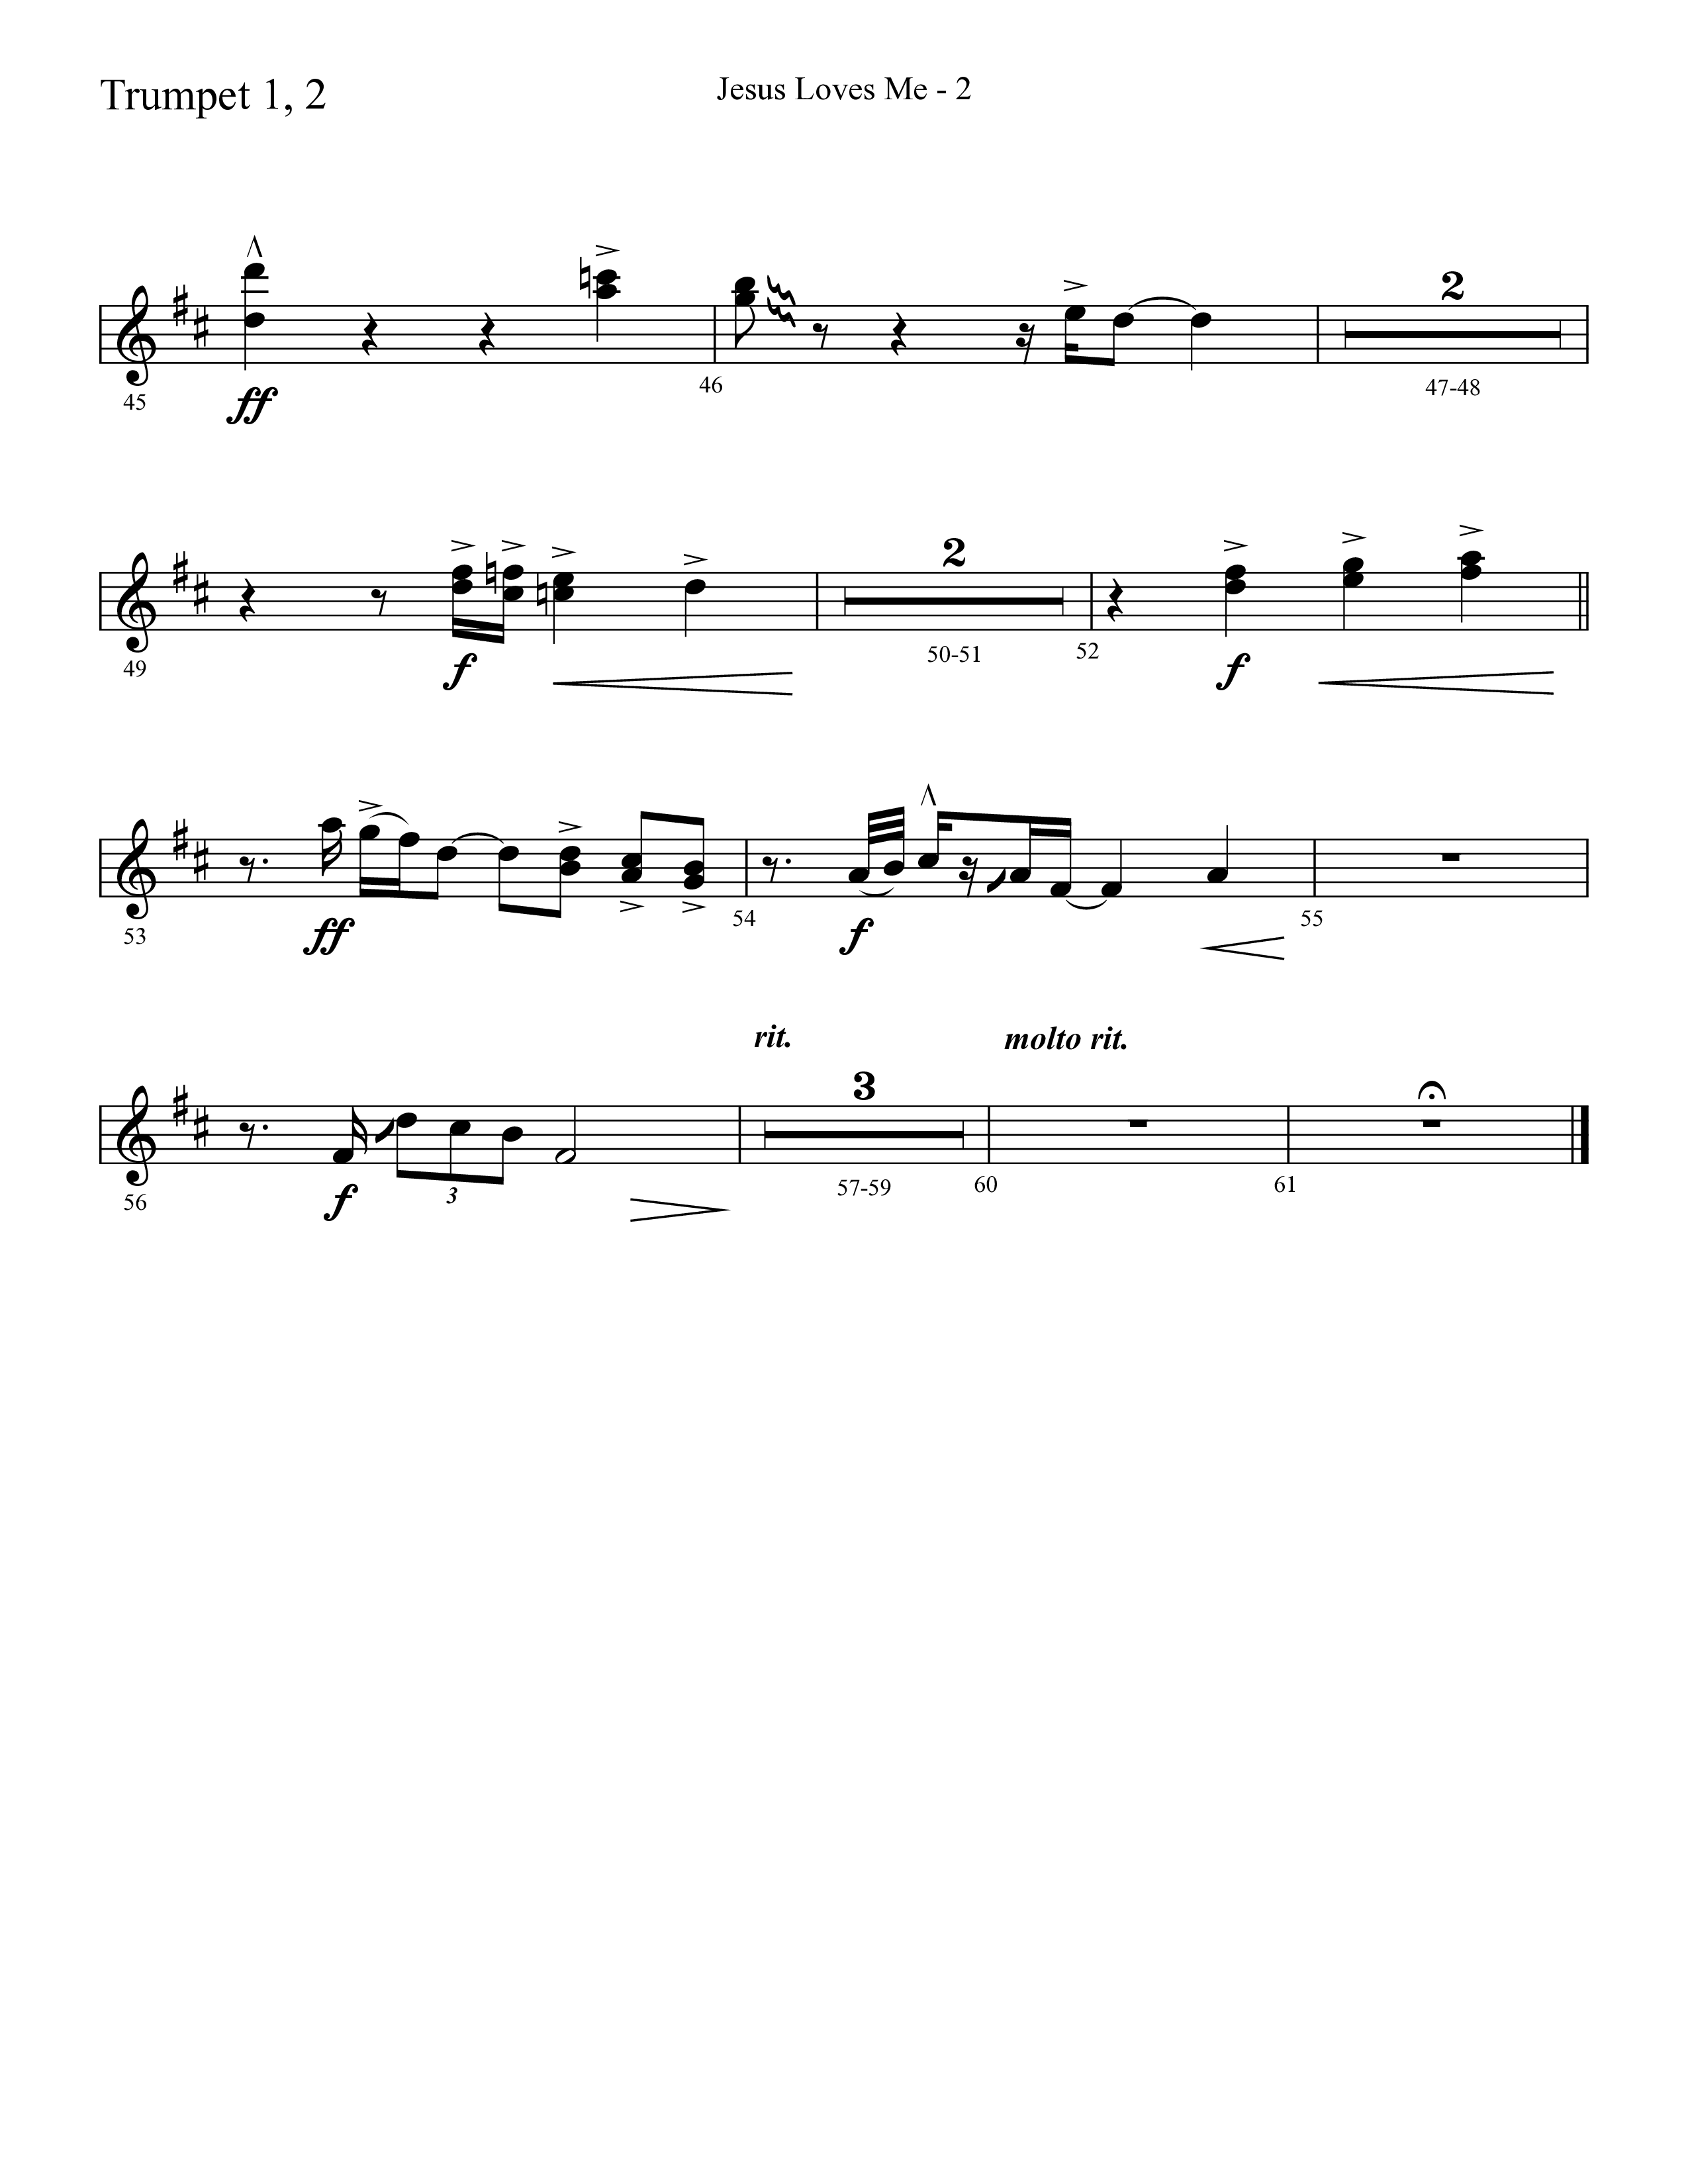 Jesus Loves Me with The Love Of God (Choral Anthem SATB) Trumpet 1,2 (Lifeway Choral / Arr. Cliff Duren)